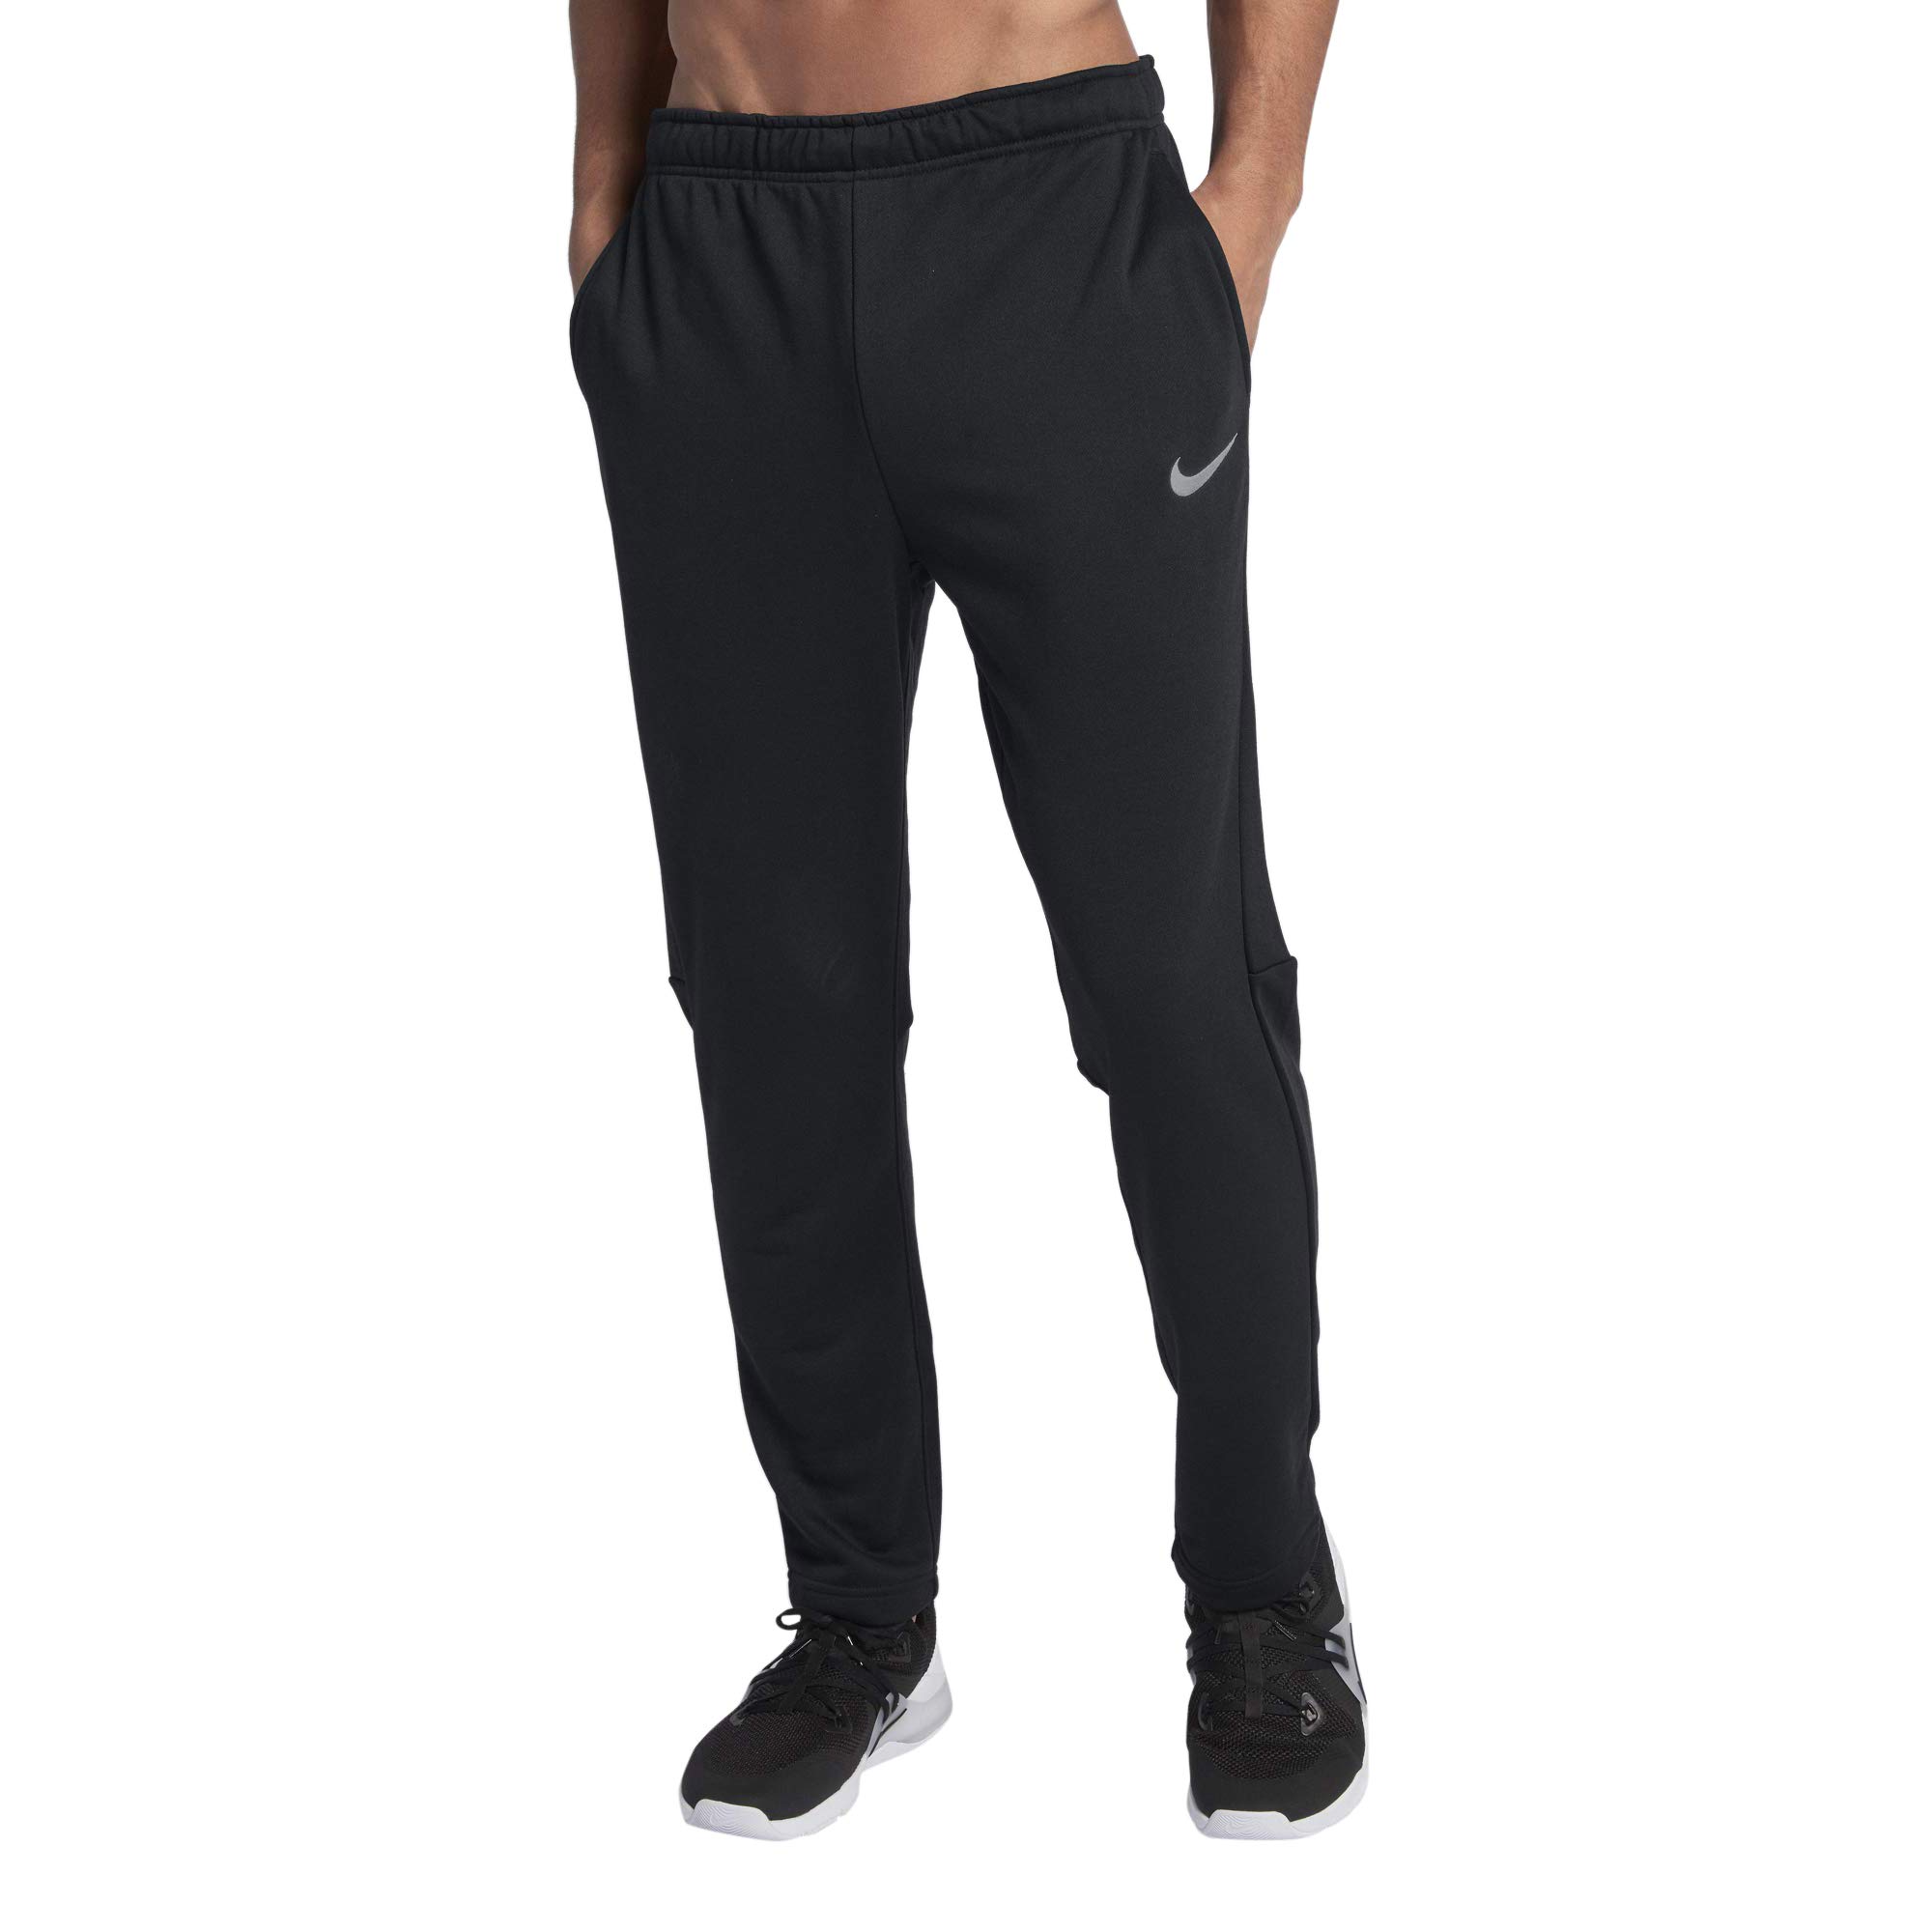 Nike | Flex Men's Training Pants | Black | SportsDirect.com